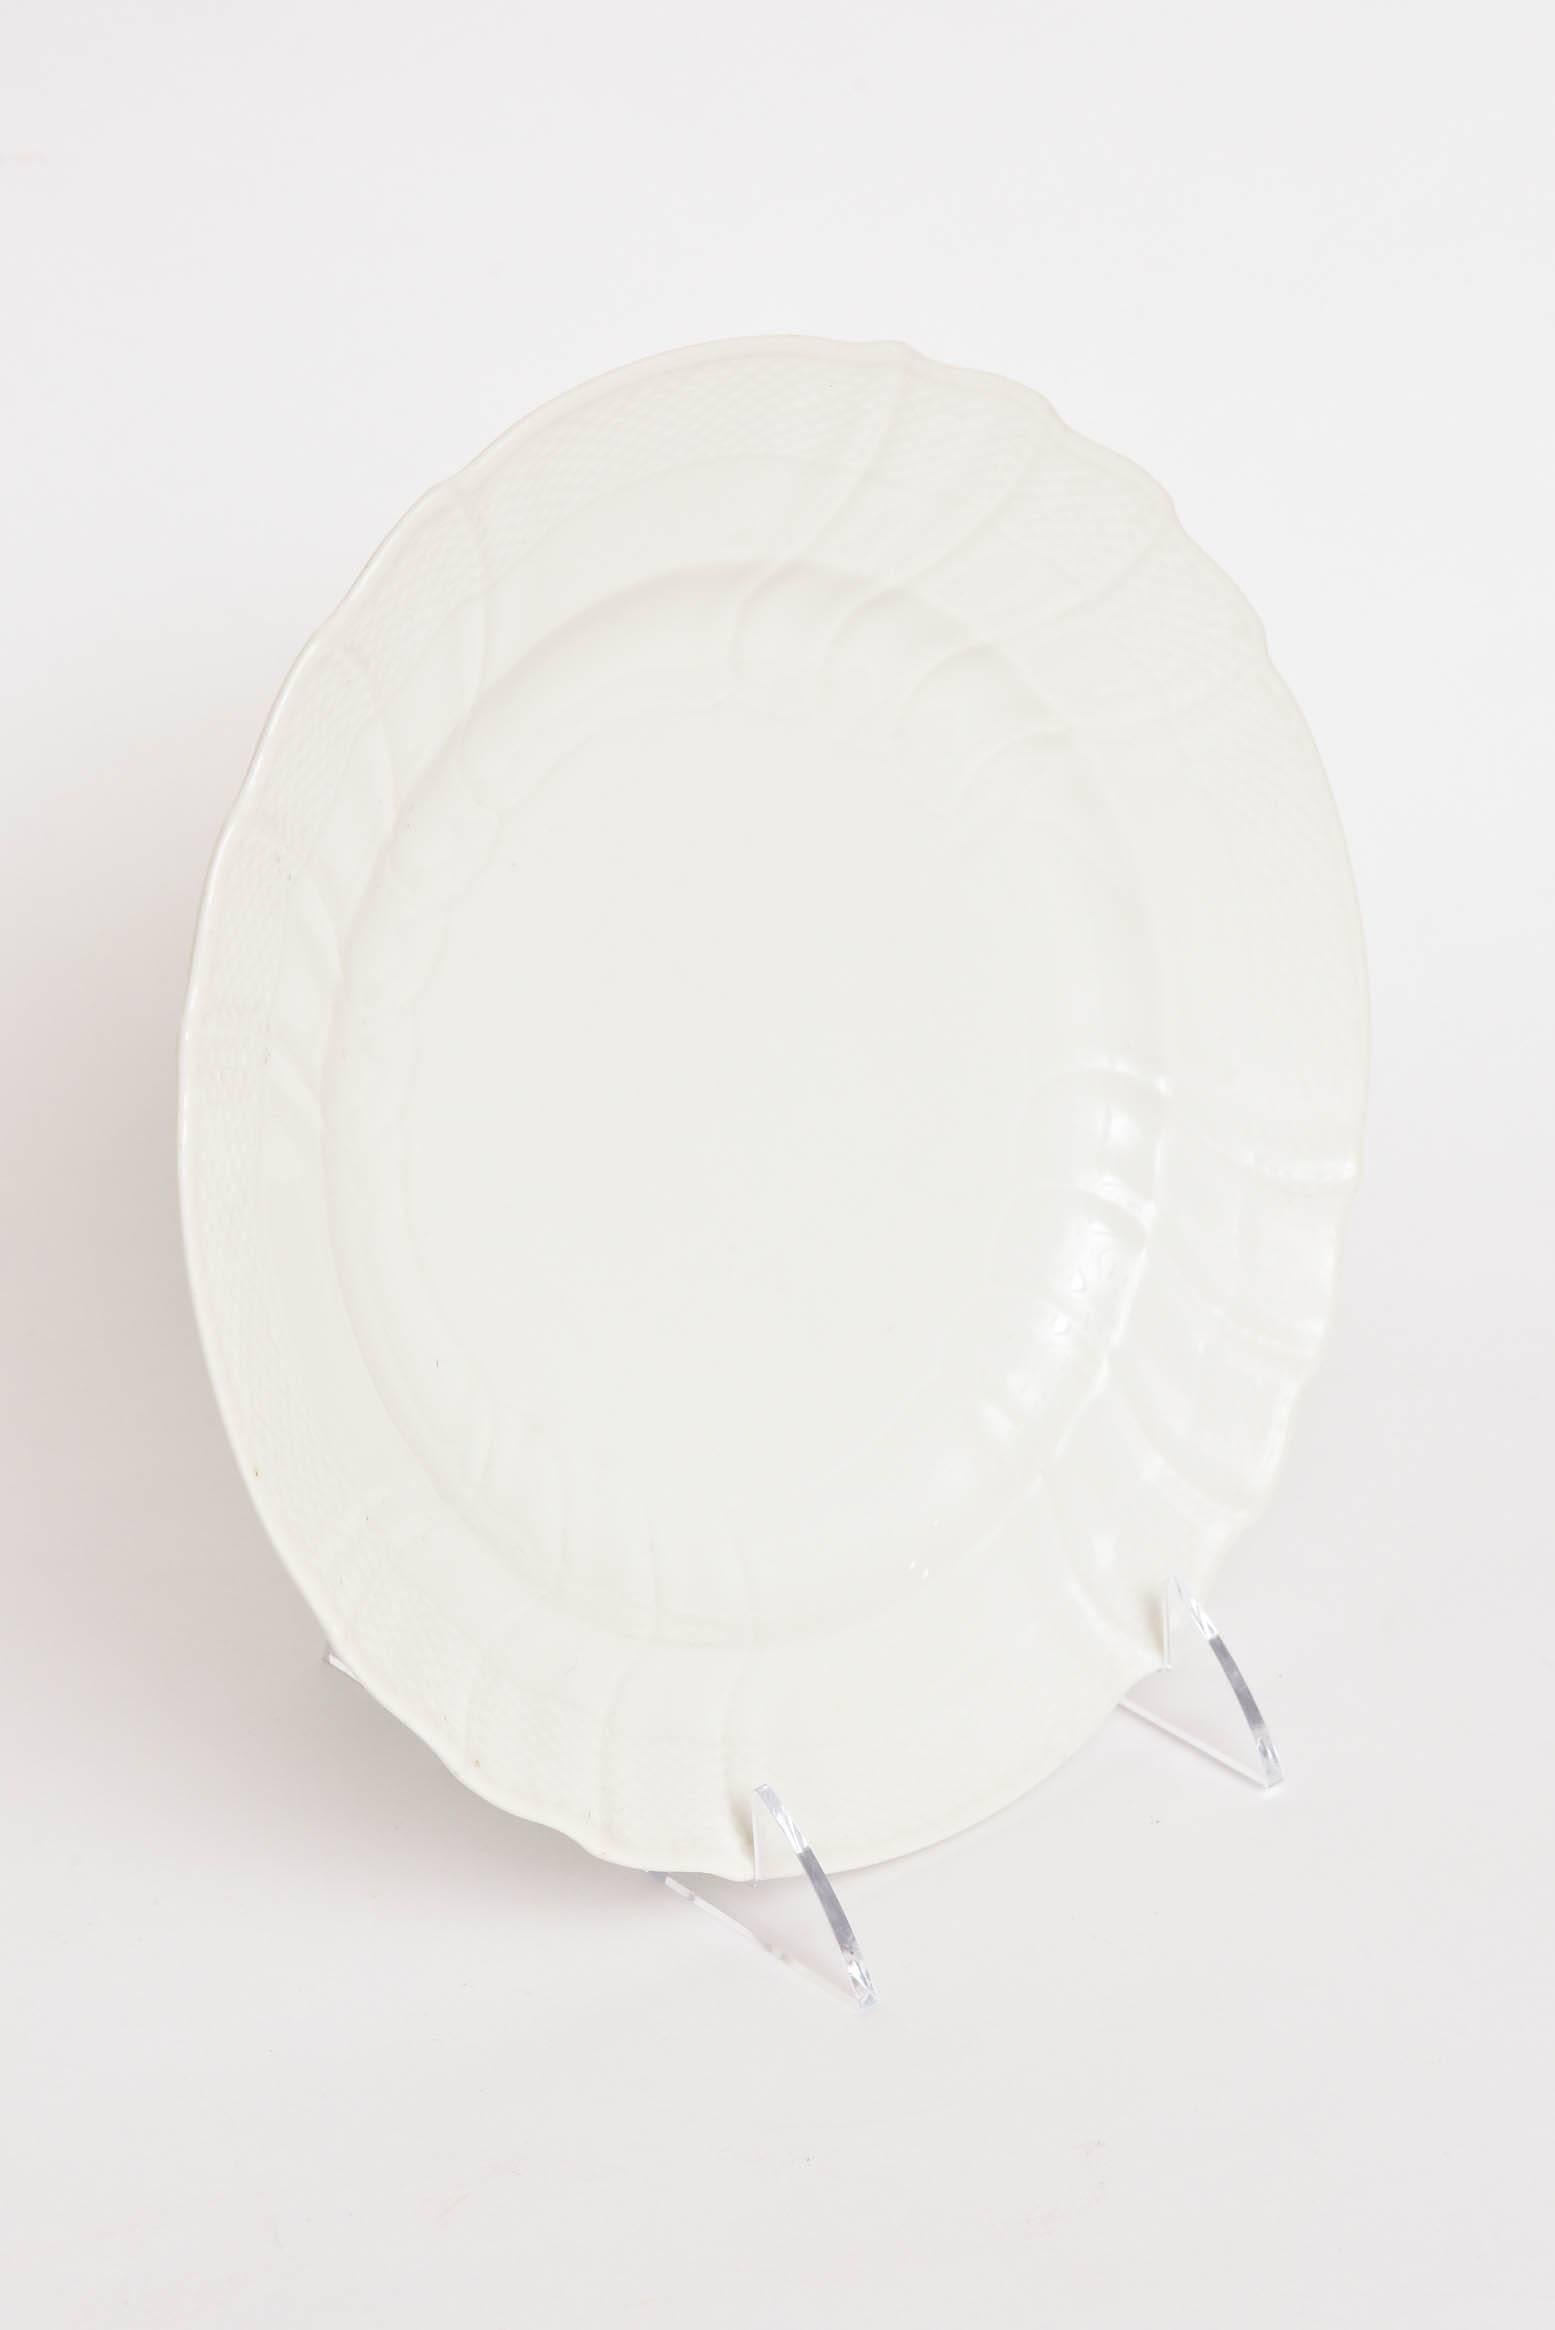 12 Dinner Plates, Antique Berlin, All White Blanc De Chine, Basket Weave Edge 2